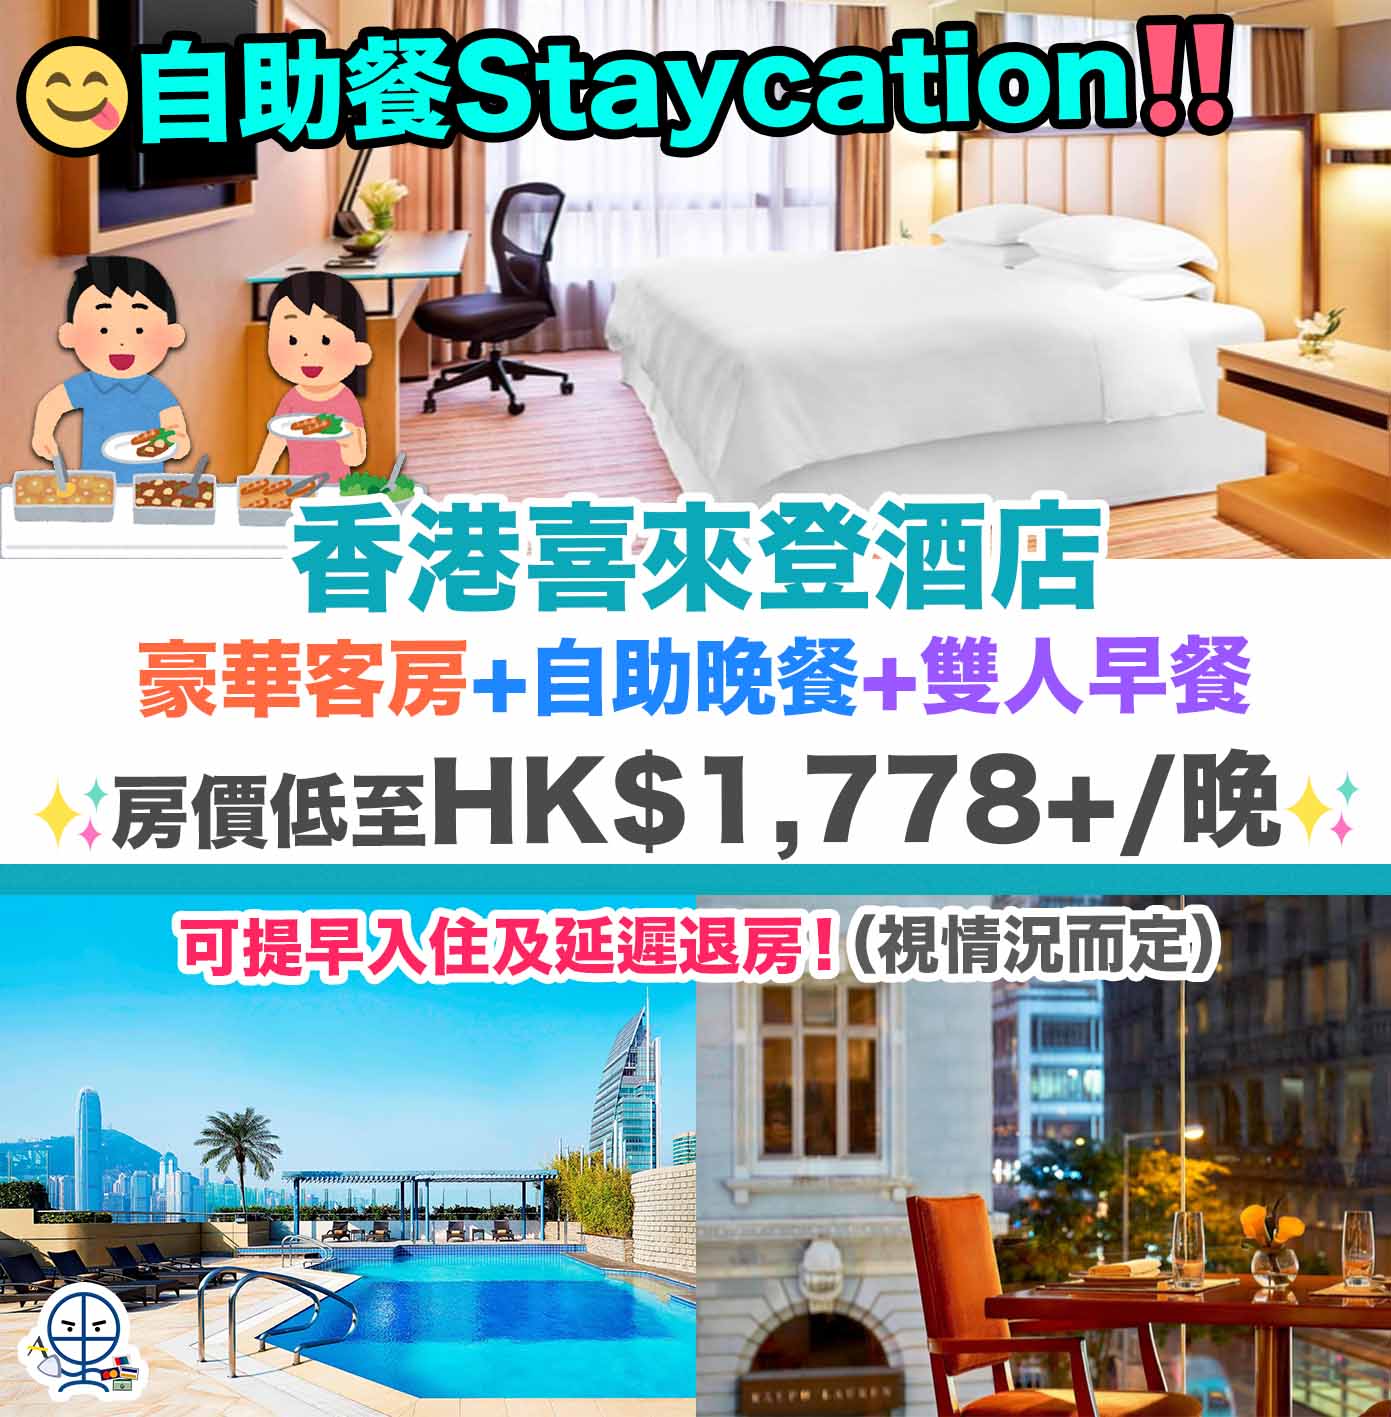 香港喜來登酒店-Sheraton Hong Kong Hotel & Towers-staycation-零房價-萬豪旅享家-marriortt bonvoy